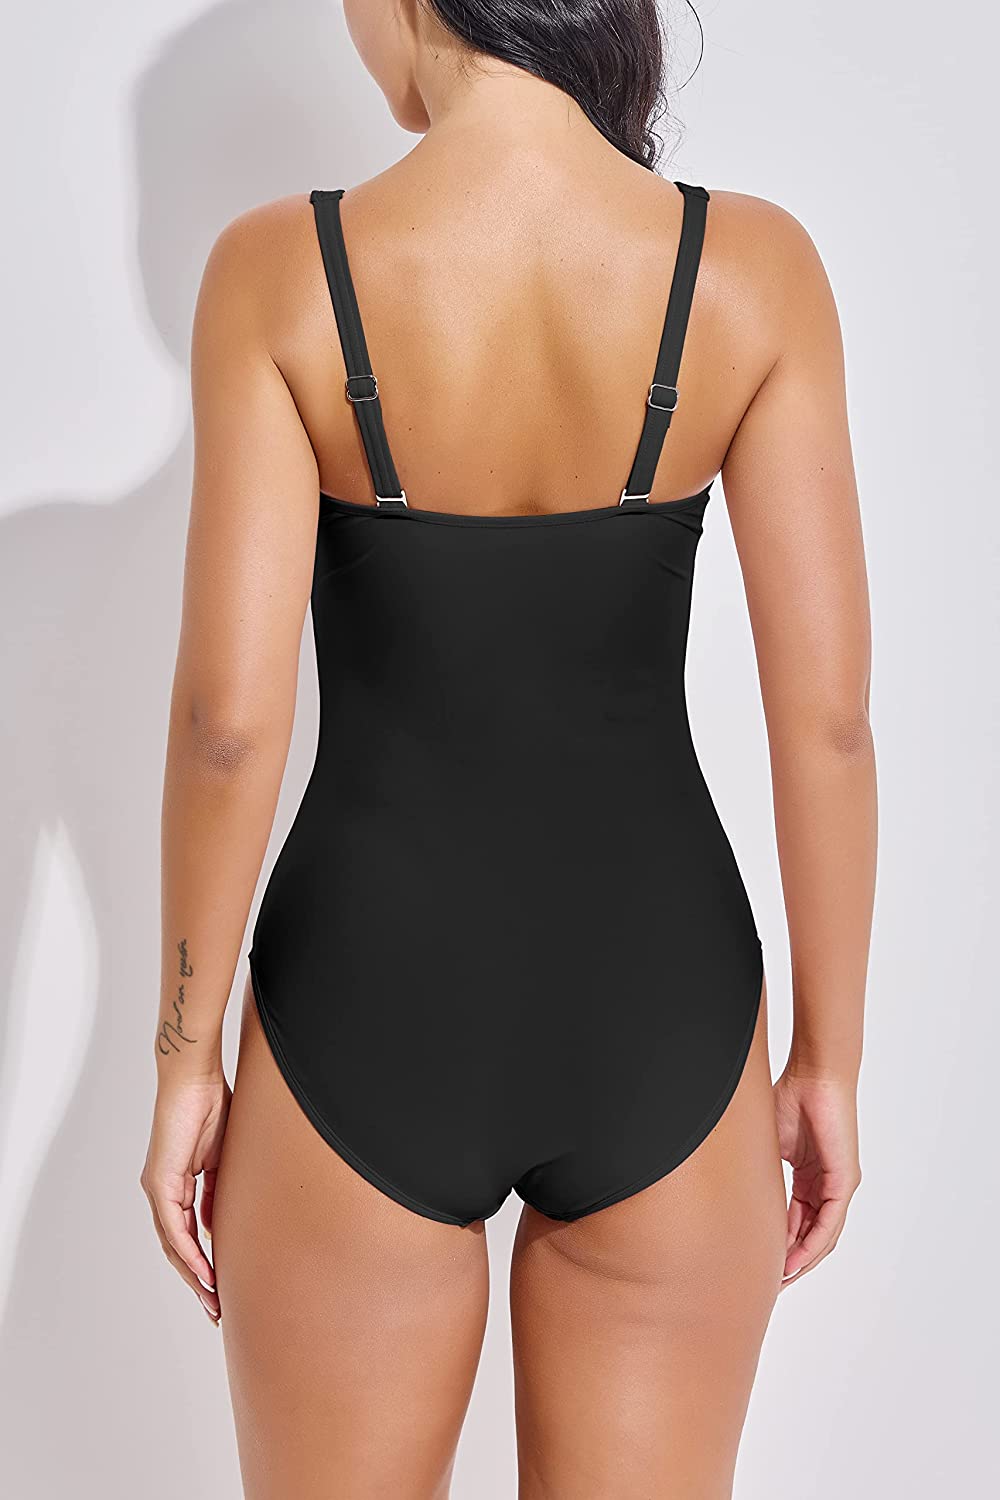 Beautikini Vintage One Piece Swimsuits Tummy Control Bathing Suits Sexy Backless Monokini Swimwear